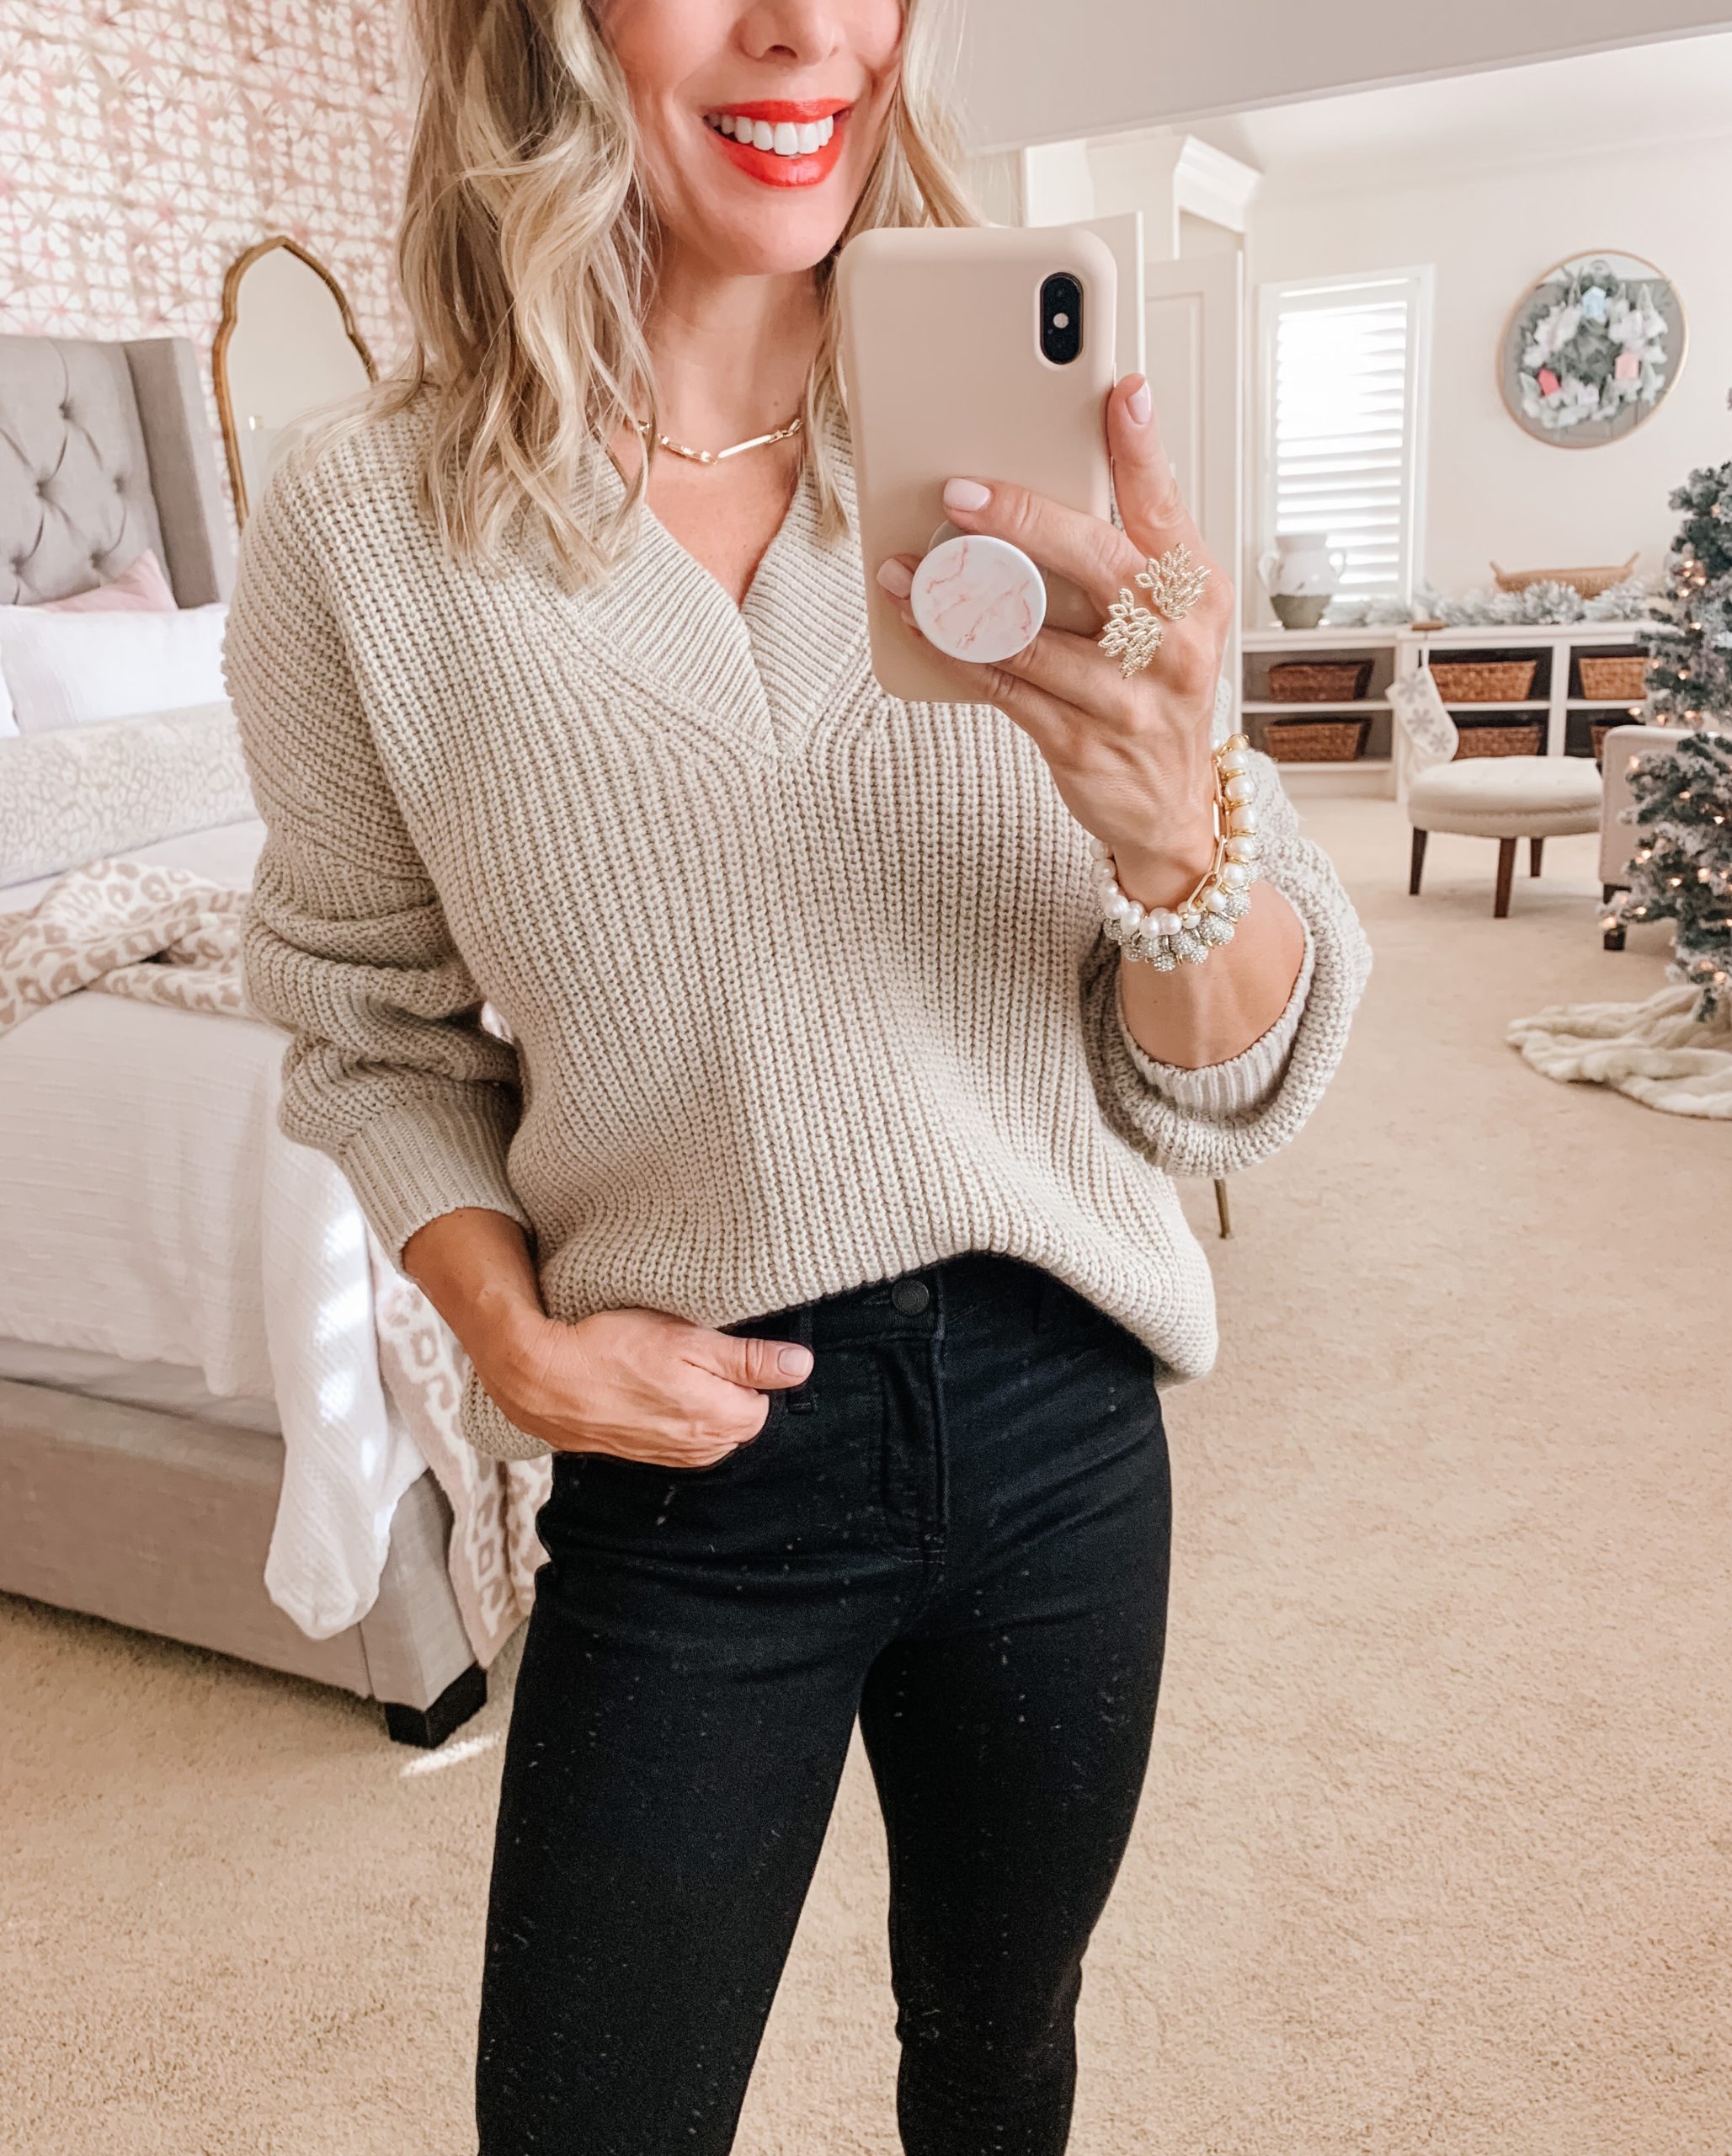 Walmart fashion - black jeans, tan sweater